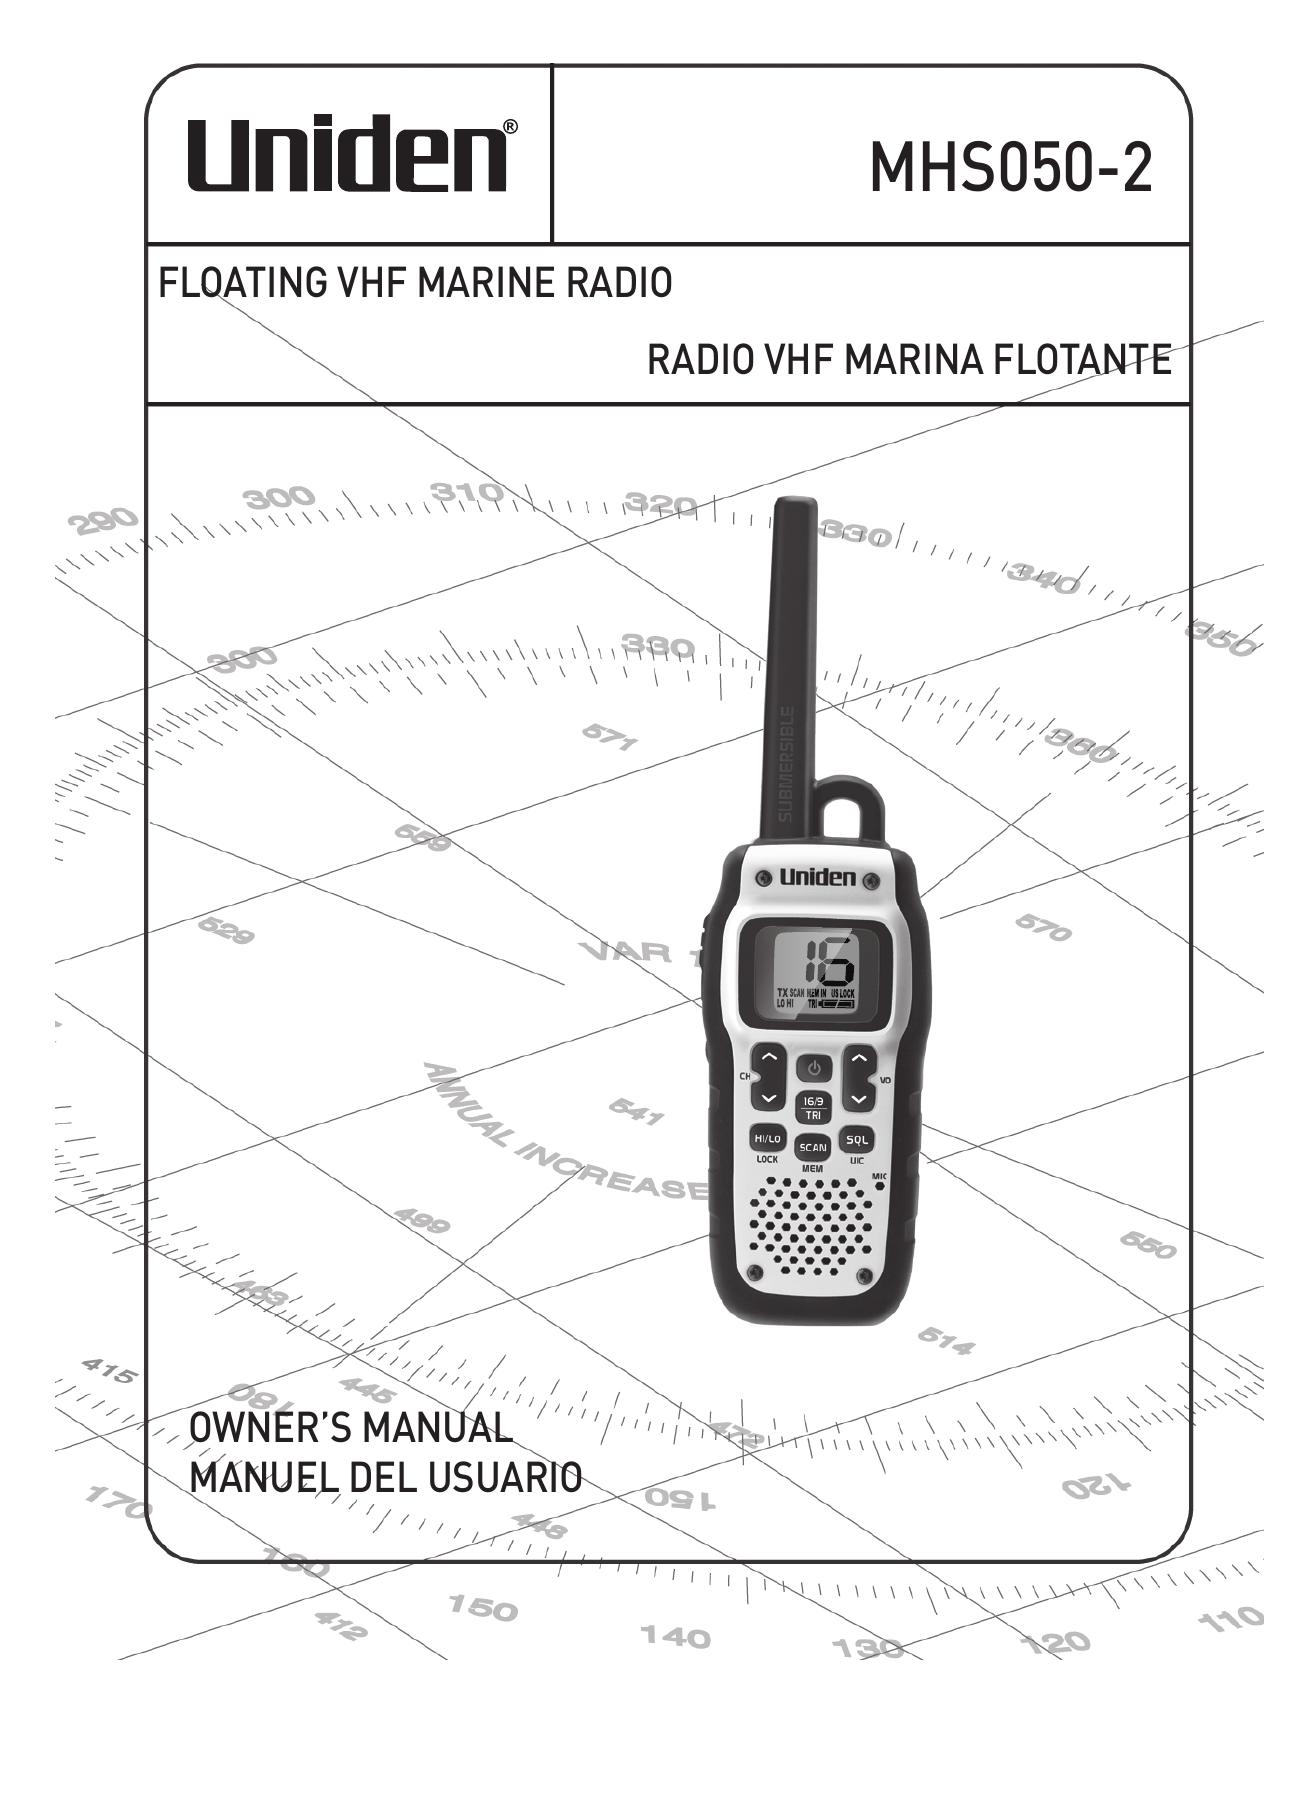 Uniden MHS050-2 Marine Radio User Manual